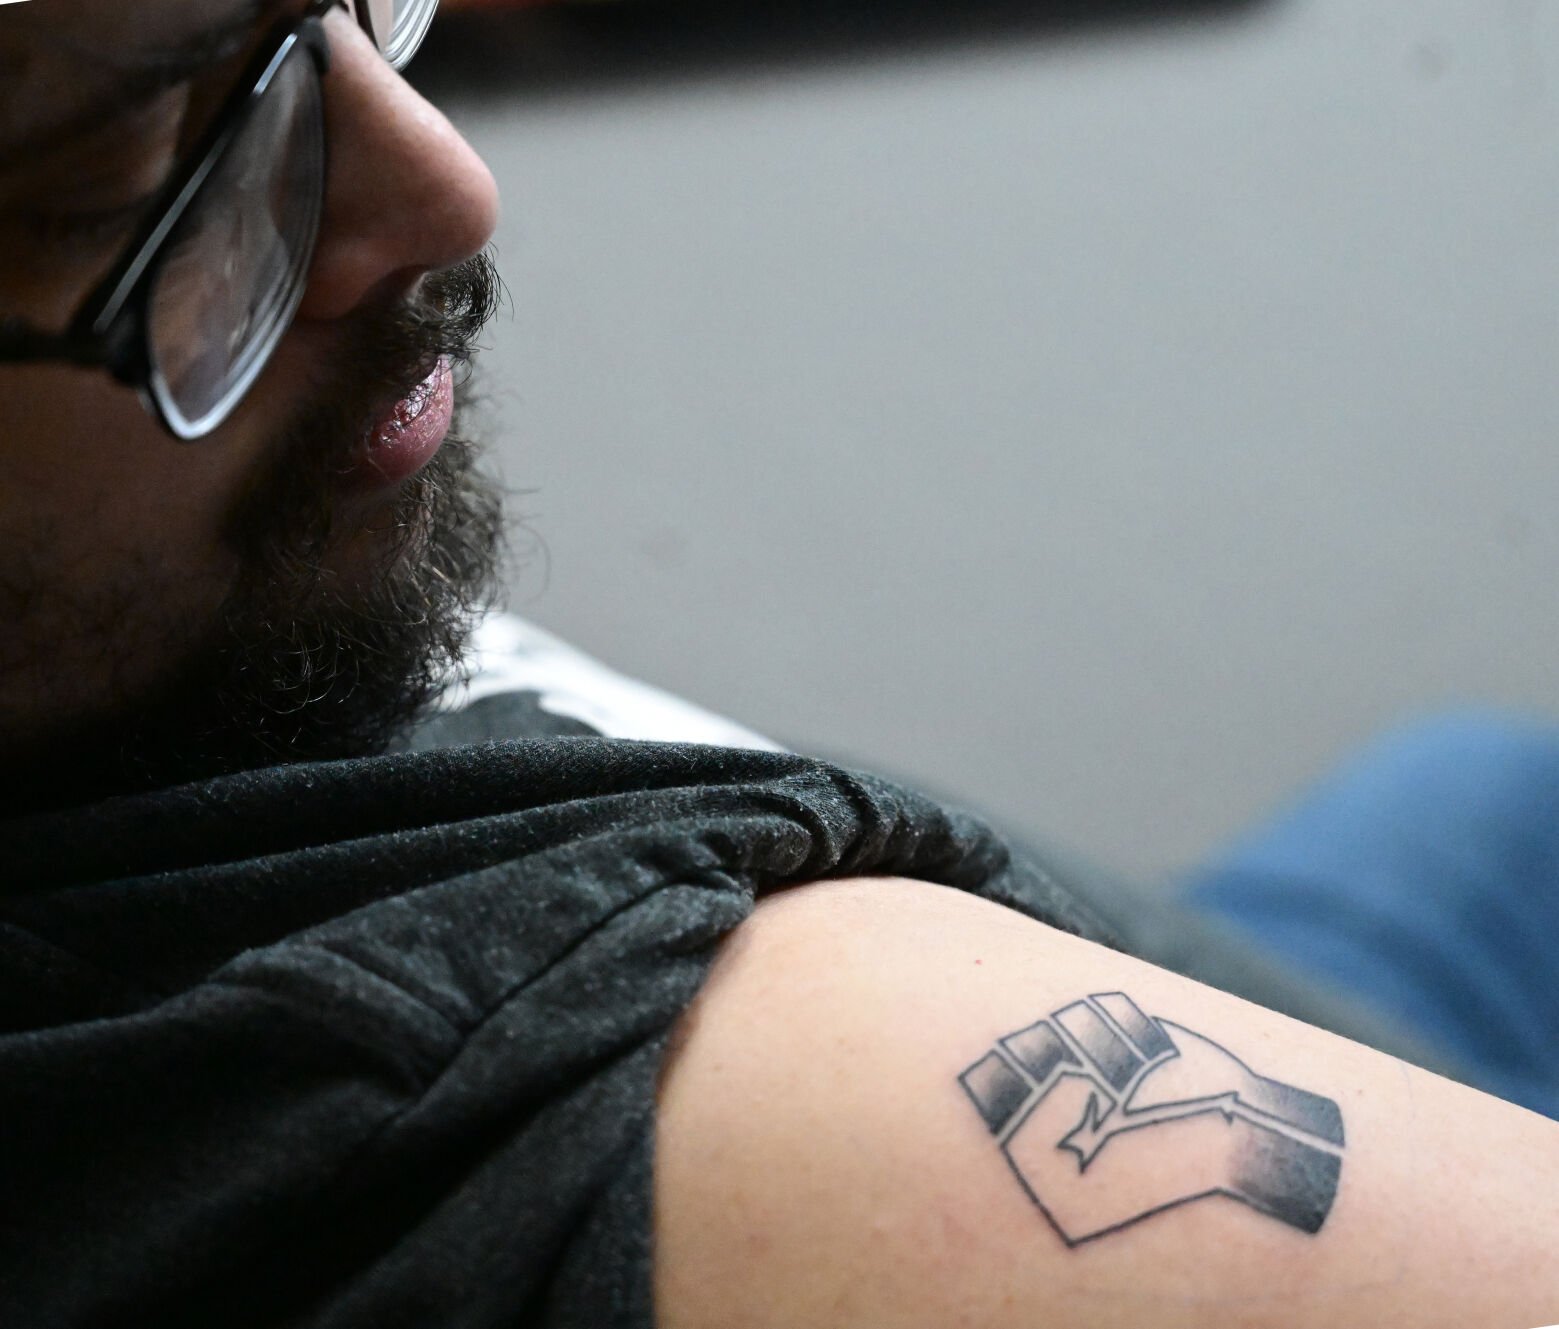 Denver tattoo parlor gives fan free Nuggets tattoo  Business   denvergazettecom